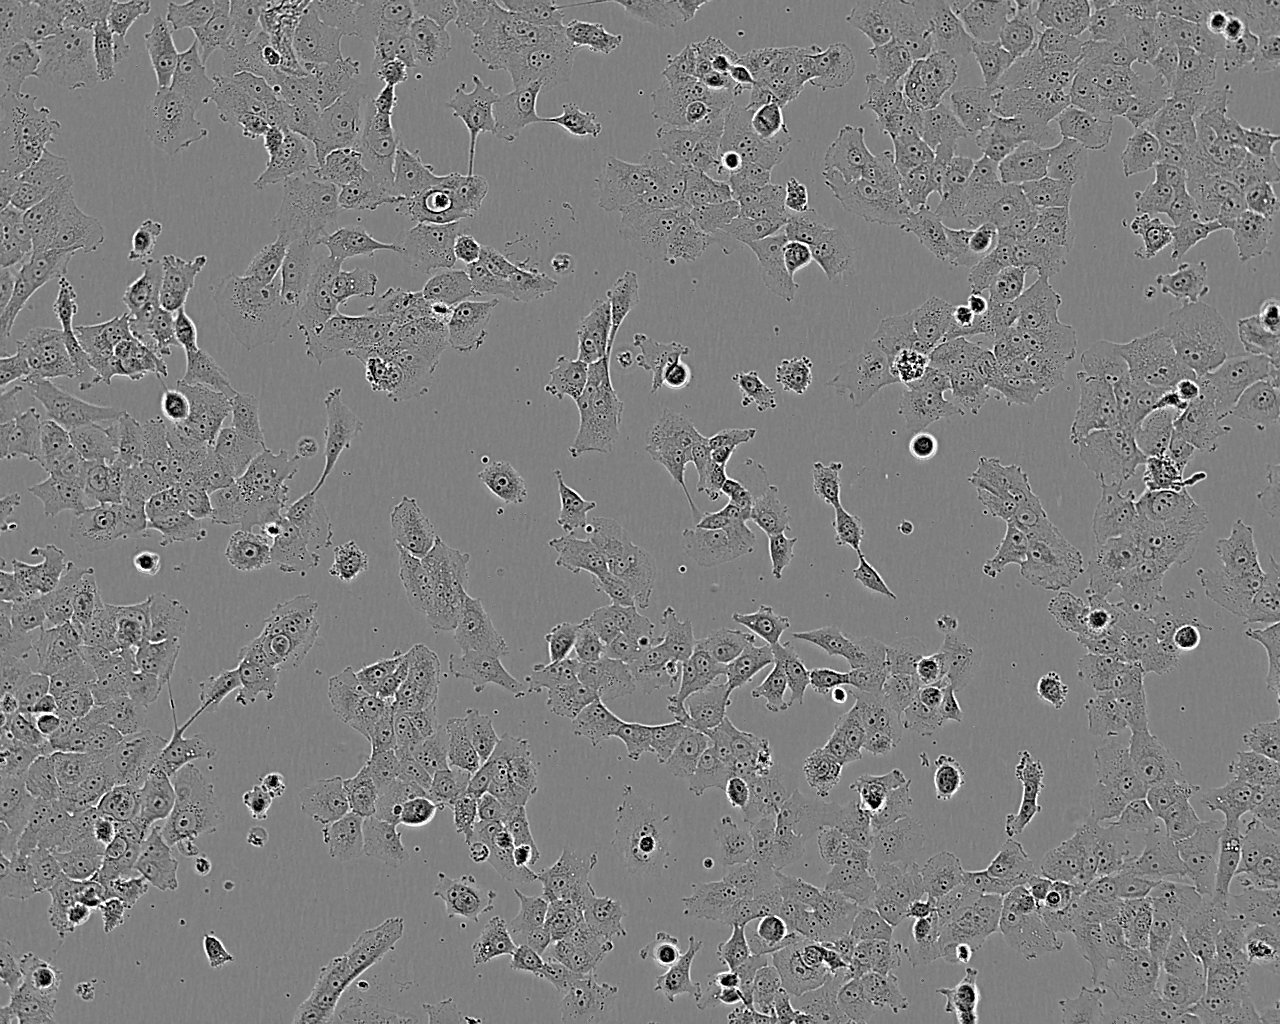 FHL124 人晶状体上皮细胞系,FHL124